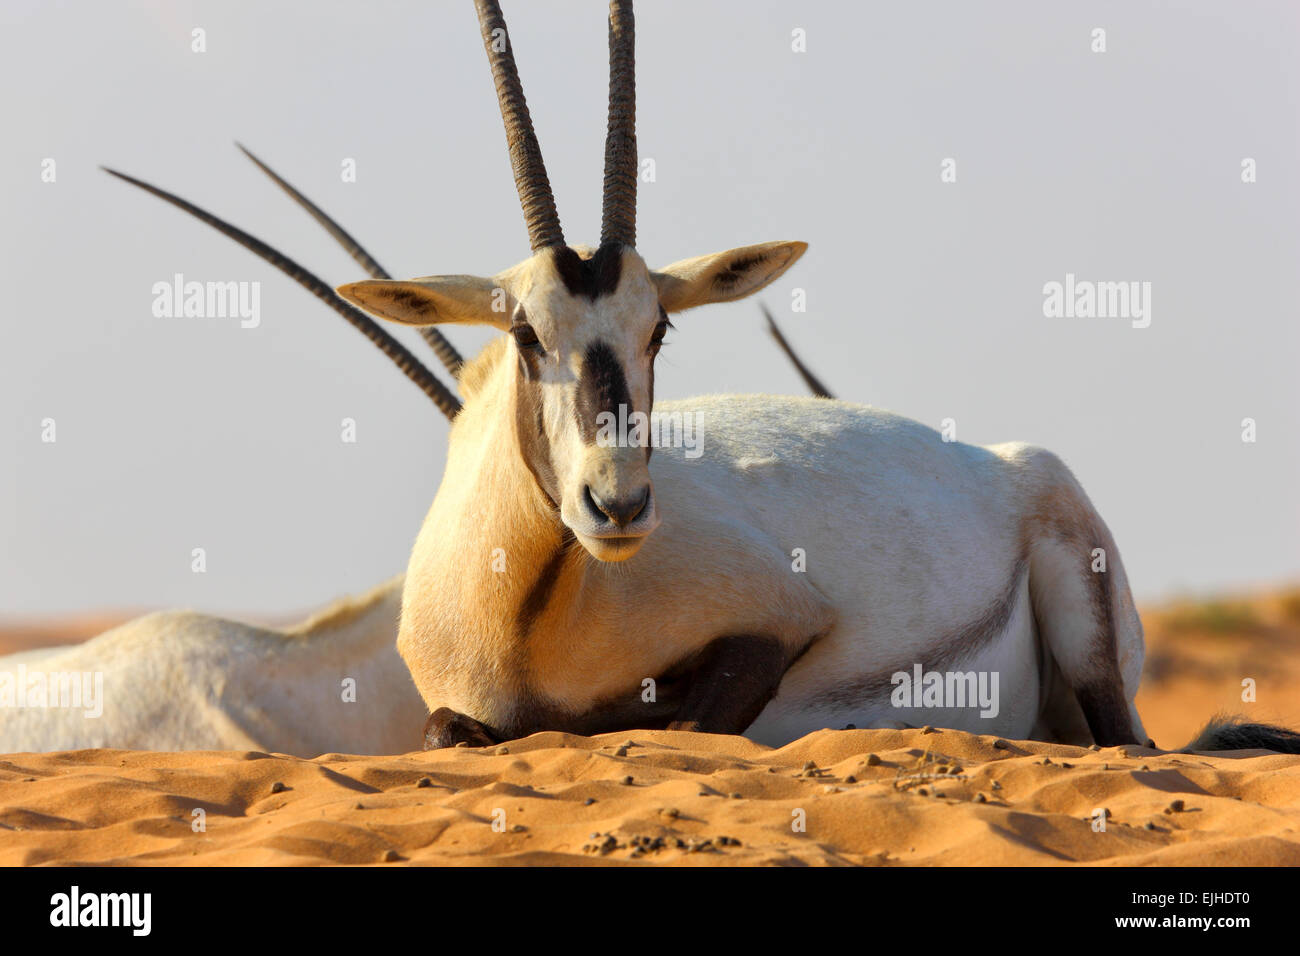 Arabische Oryx-Antilope hautnah. Stockfoto